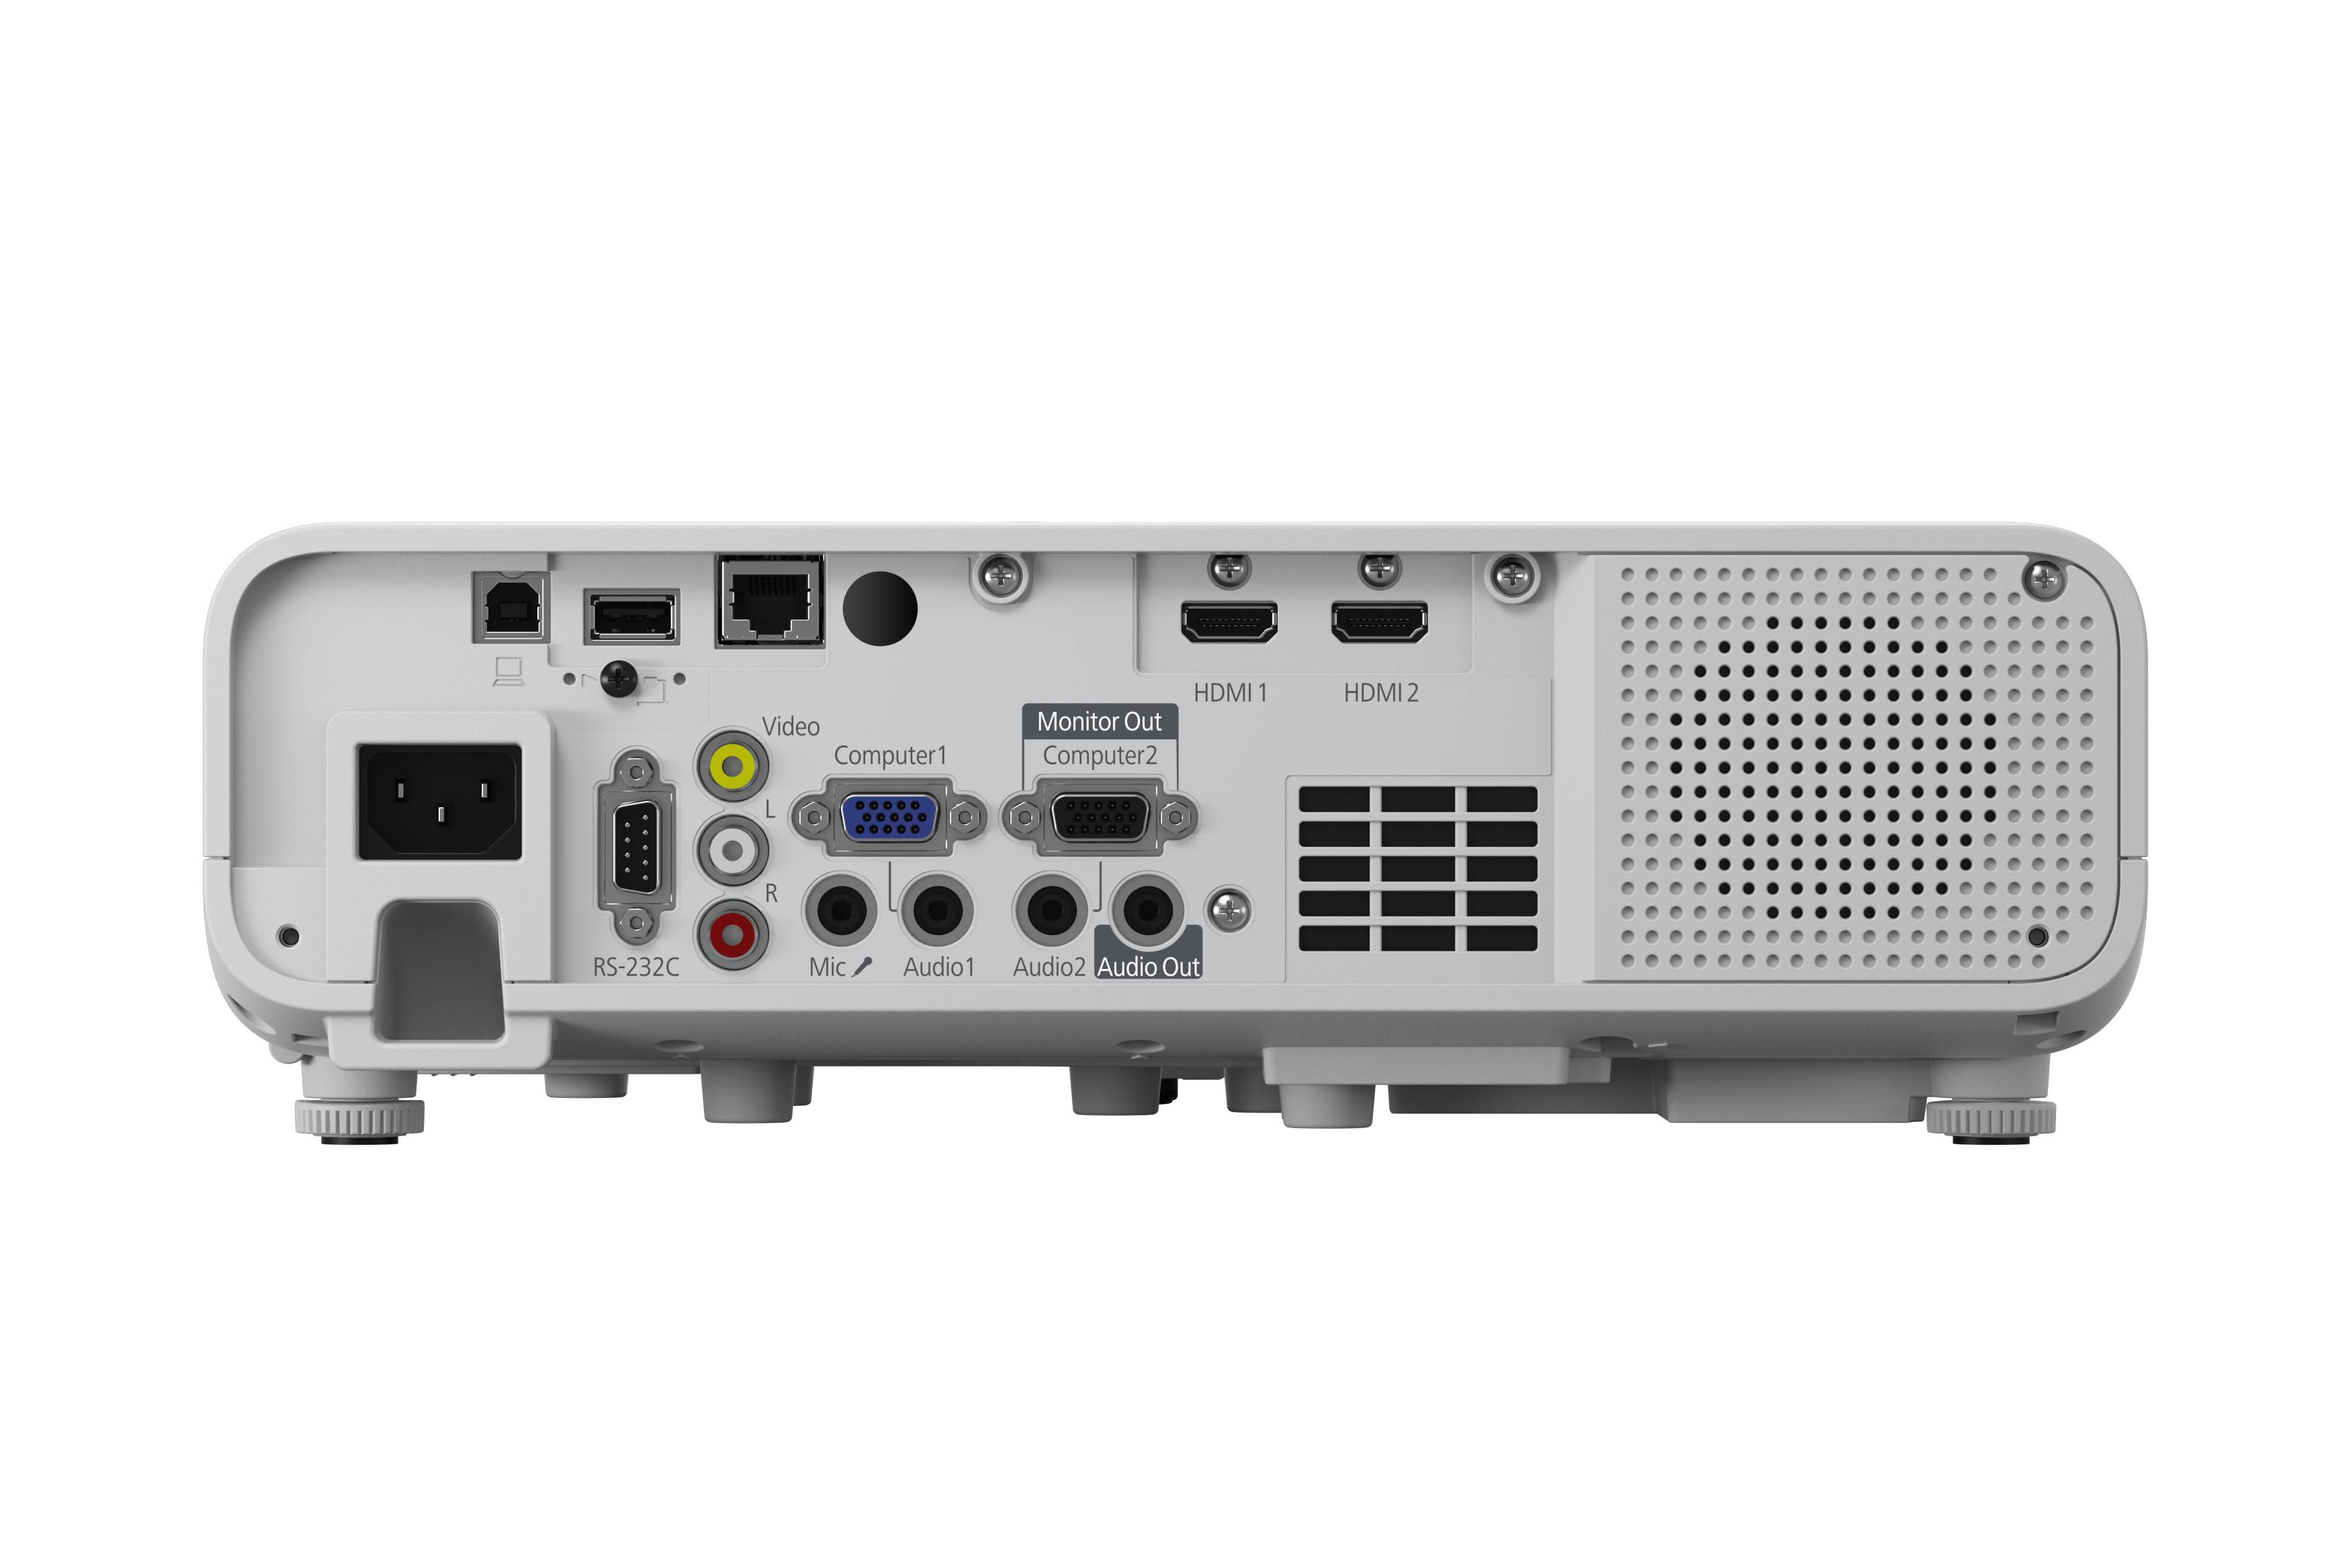 Rca Informatique - image du produit : EB-L200W PROJECTORS USB 2.0 VGA/LAN/HDMI